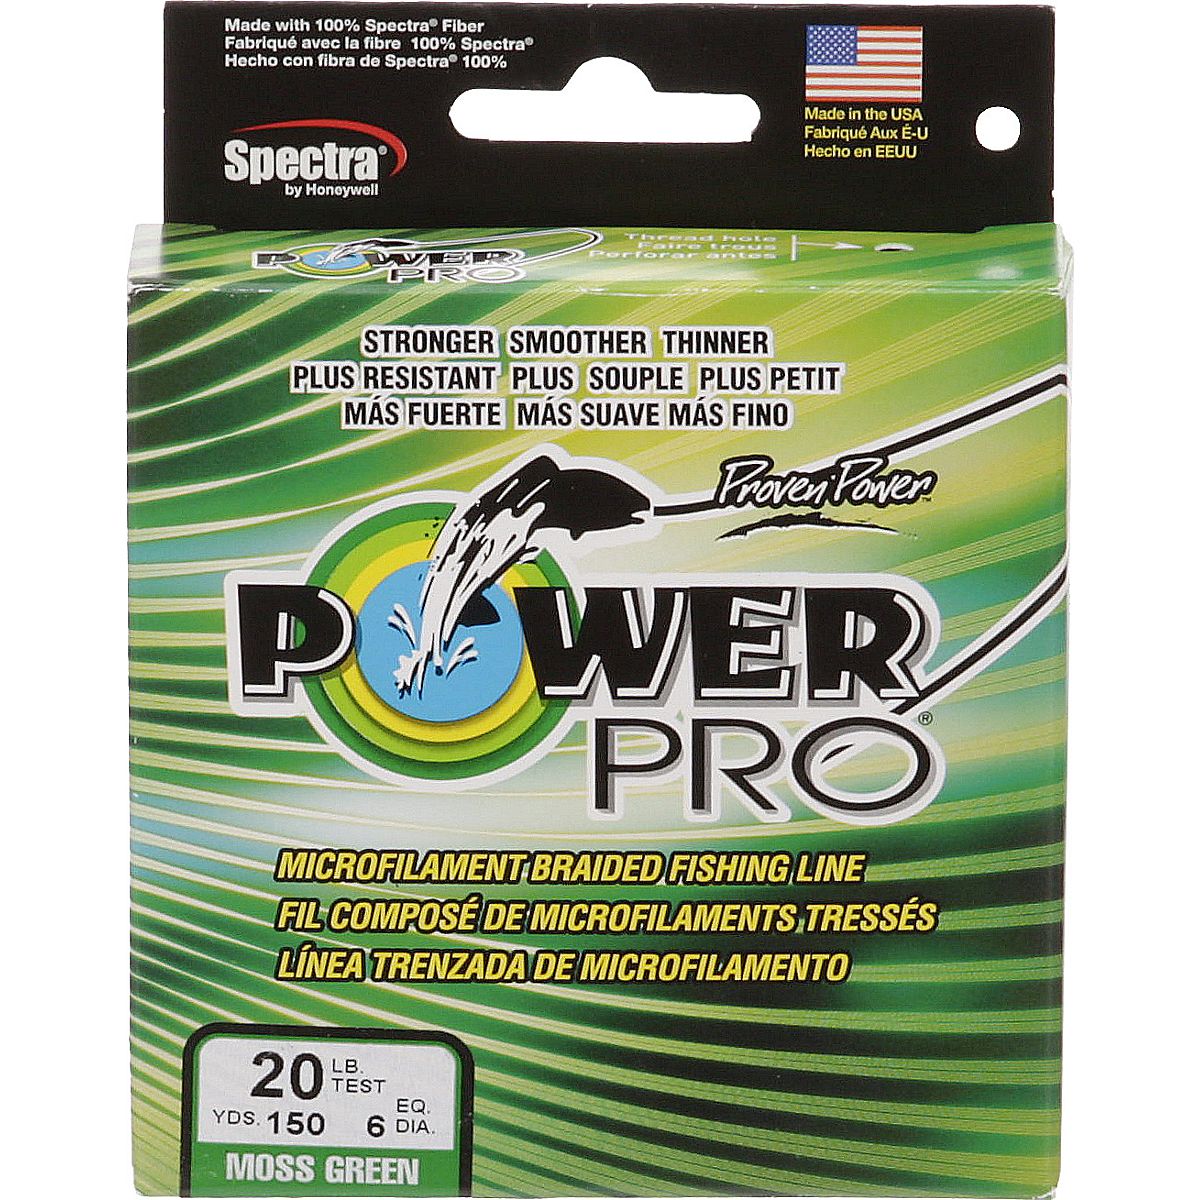  Power Pro 21100203000W Fishing Line, 20 lb/3000 yd